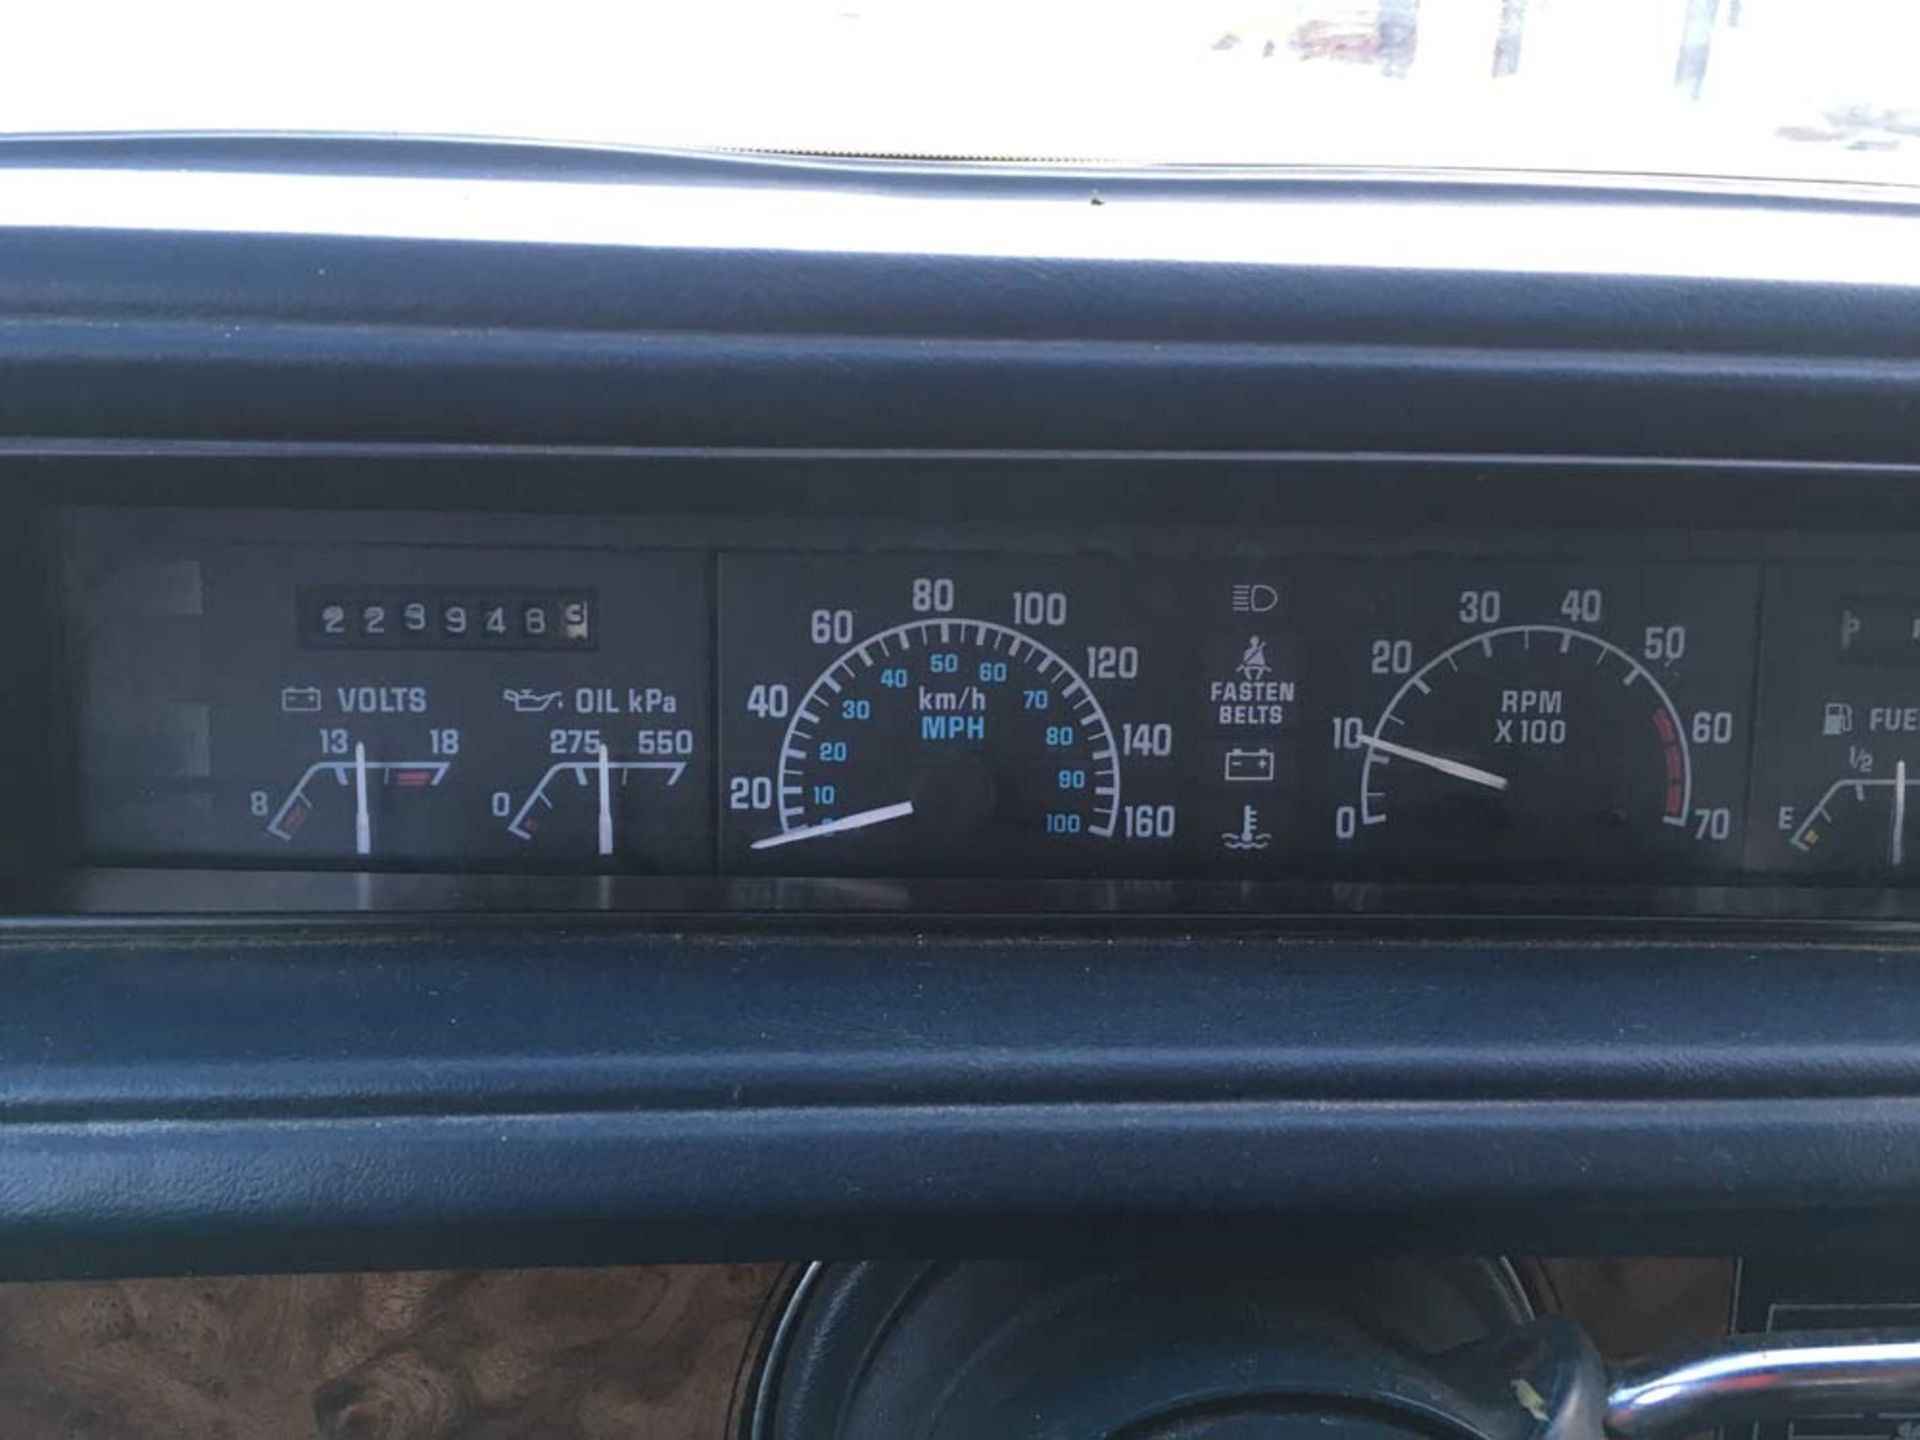 1989 Buick LeSabre 4 Door Sedan - Image 6 of 6